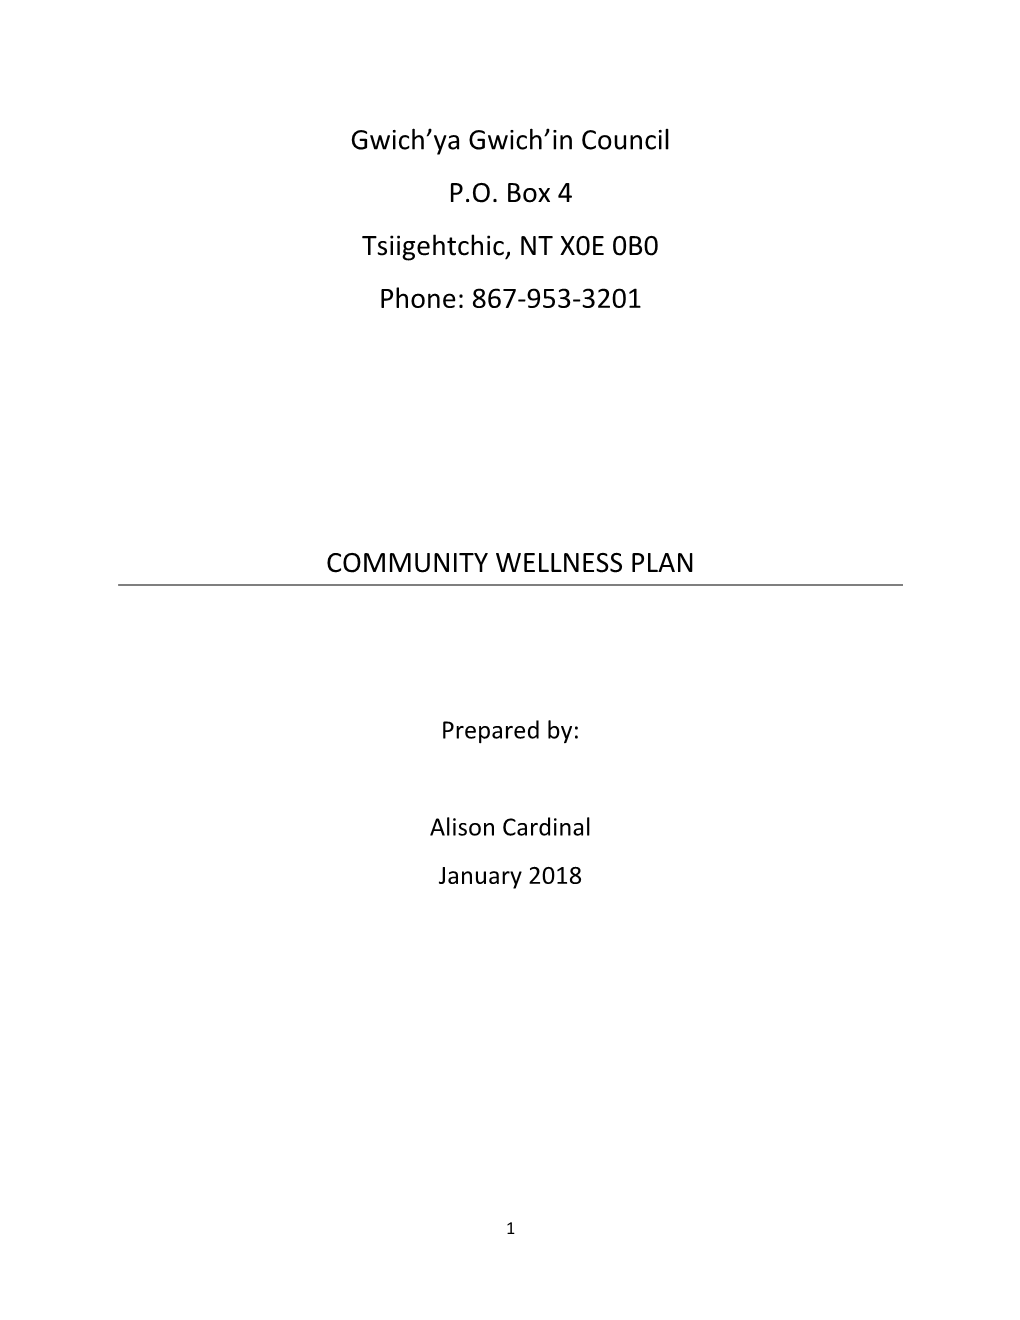 Tsiigehtchic Community Wellness Plan